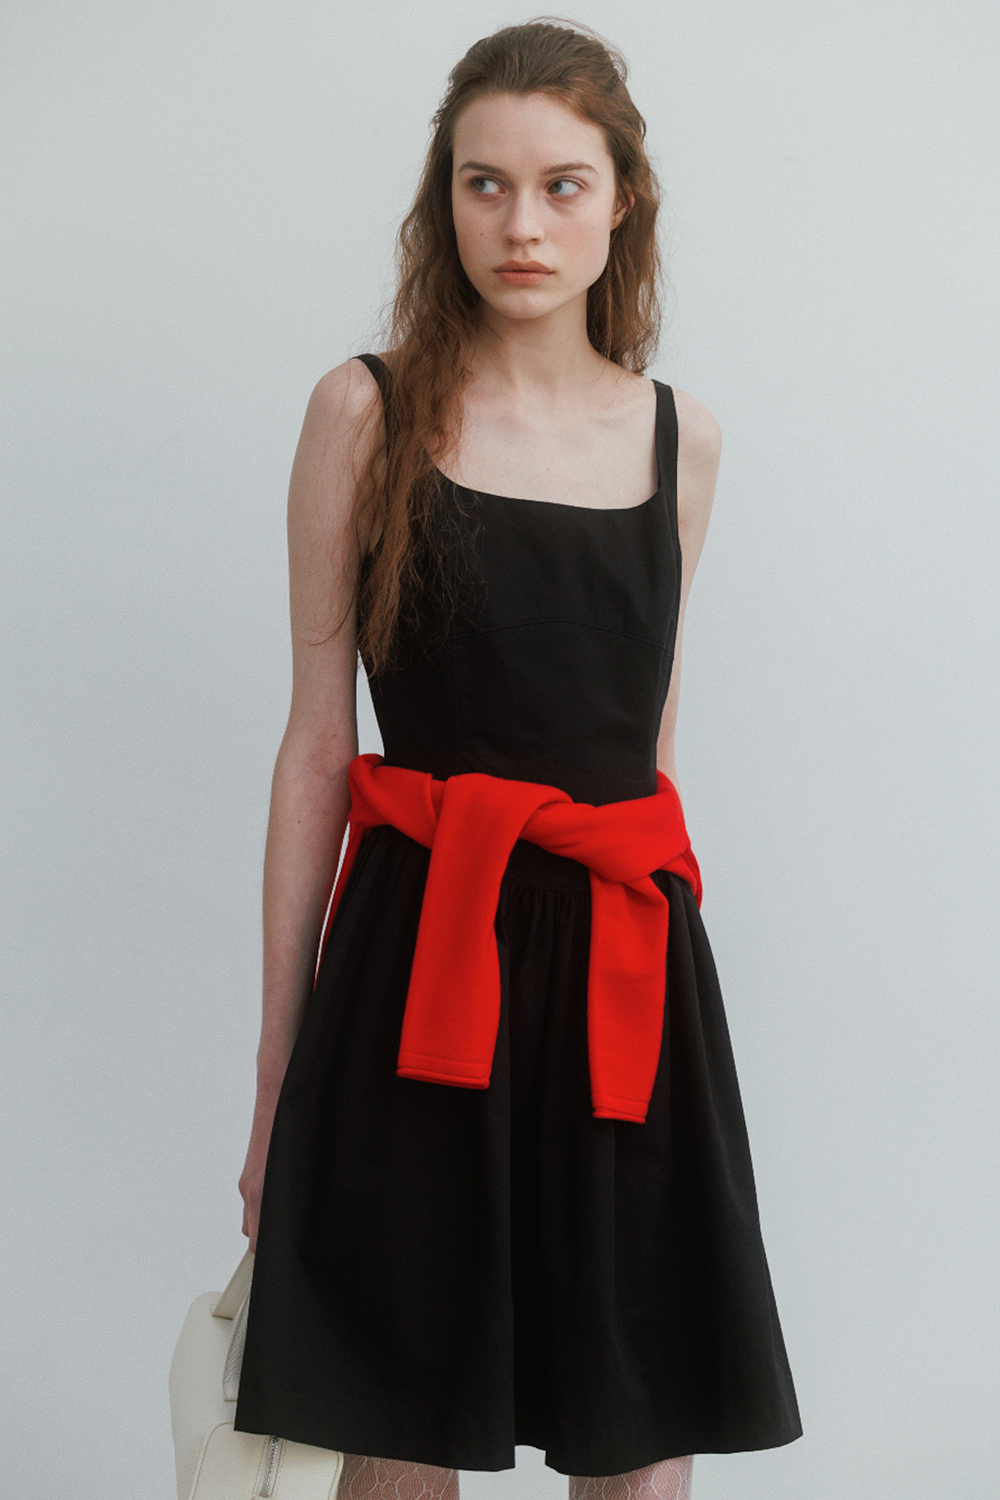 [REORDER] Saona Cotton Dress in Black